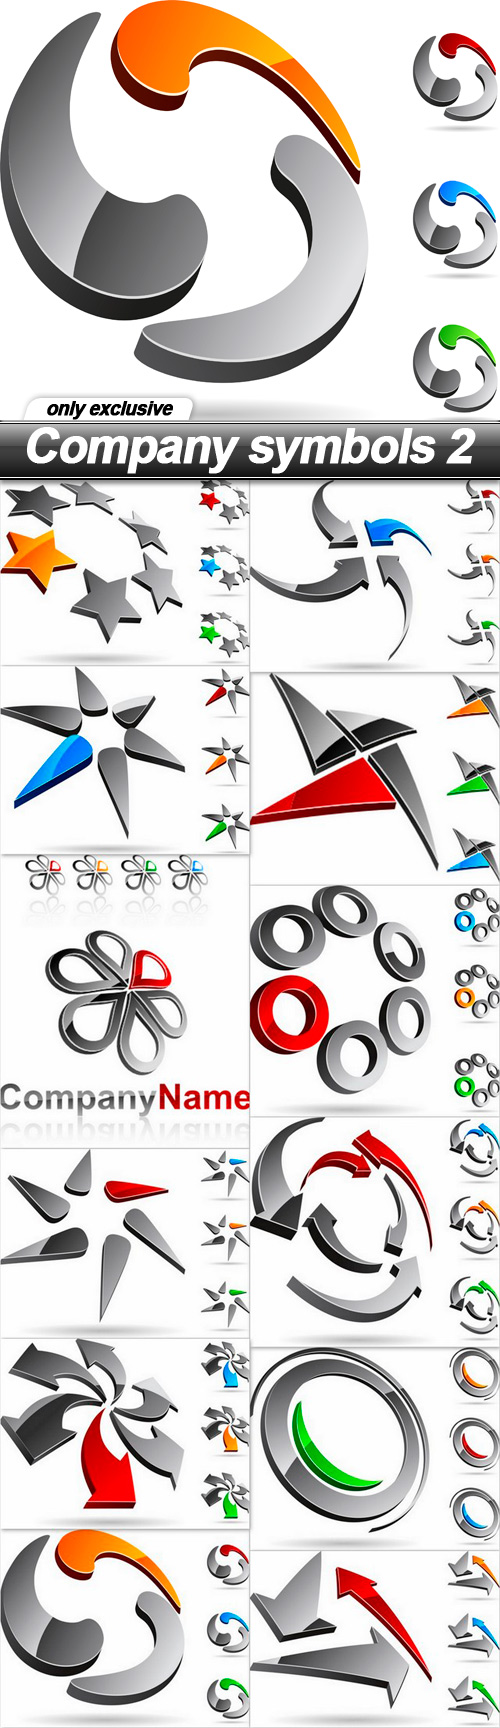 Company symbols 2 - 12 EPS